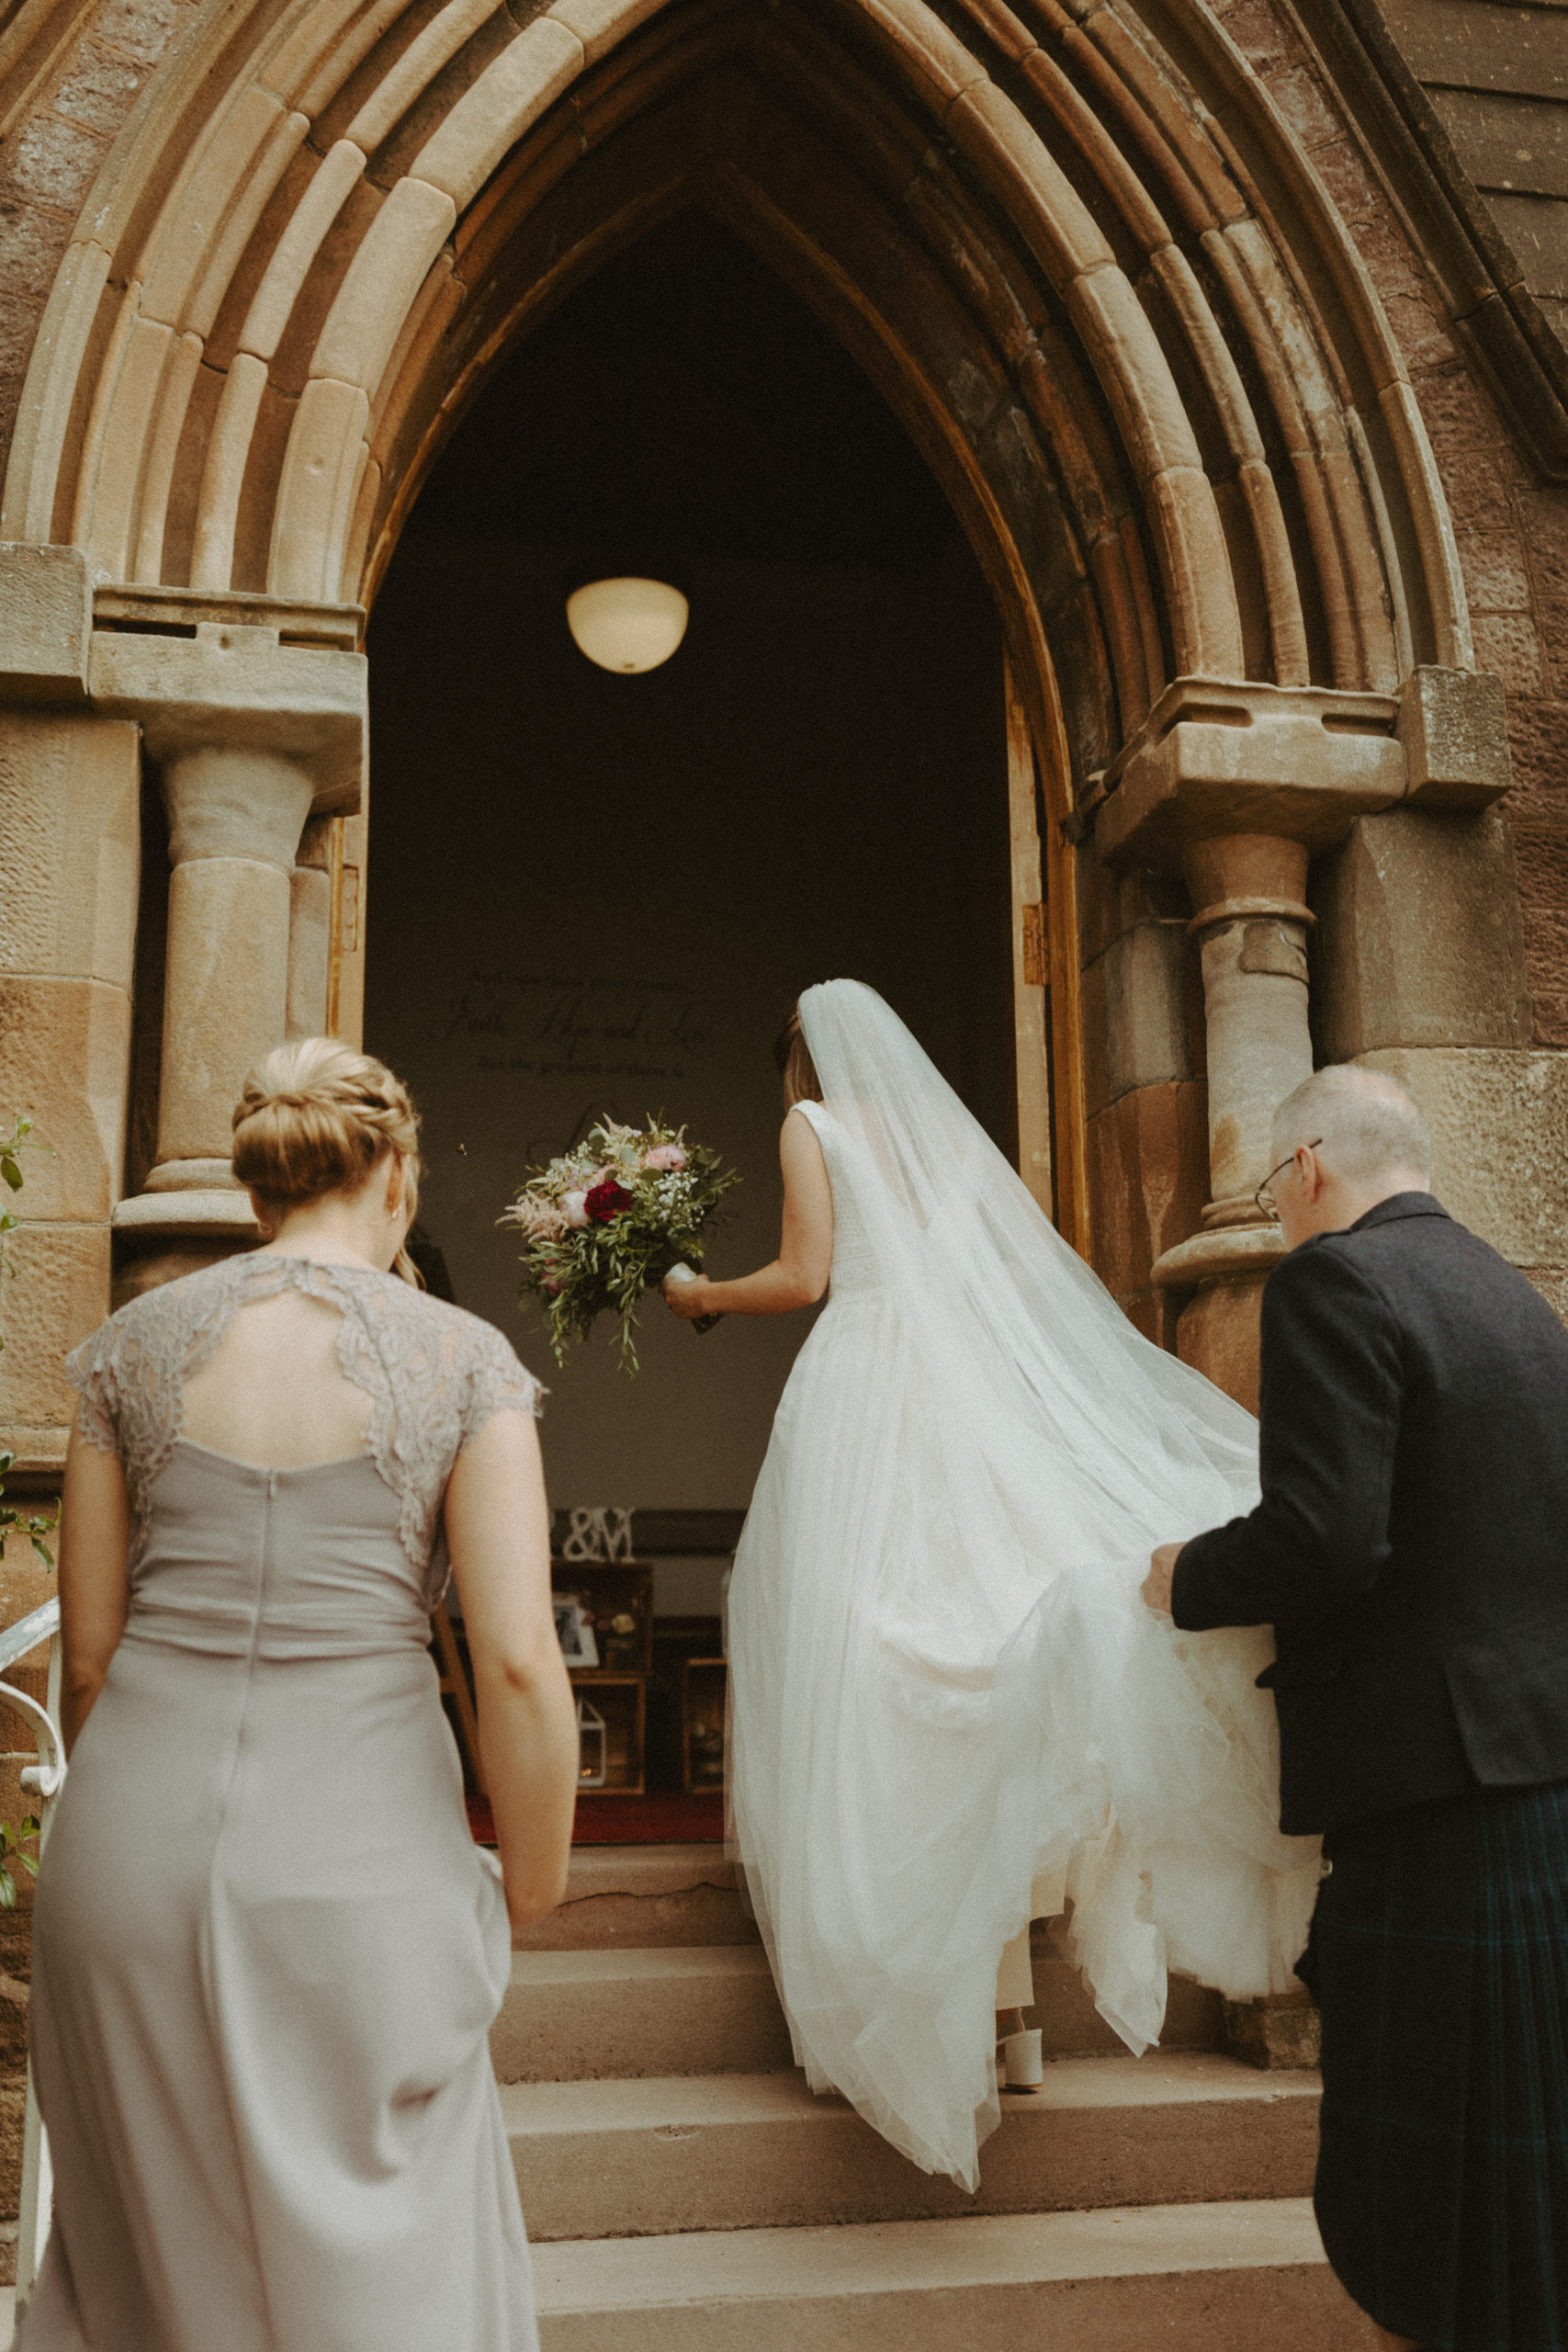 the bride entering the church